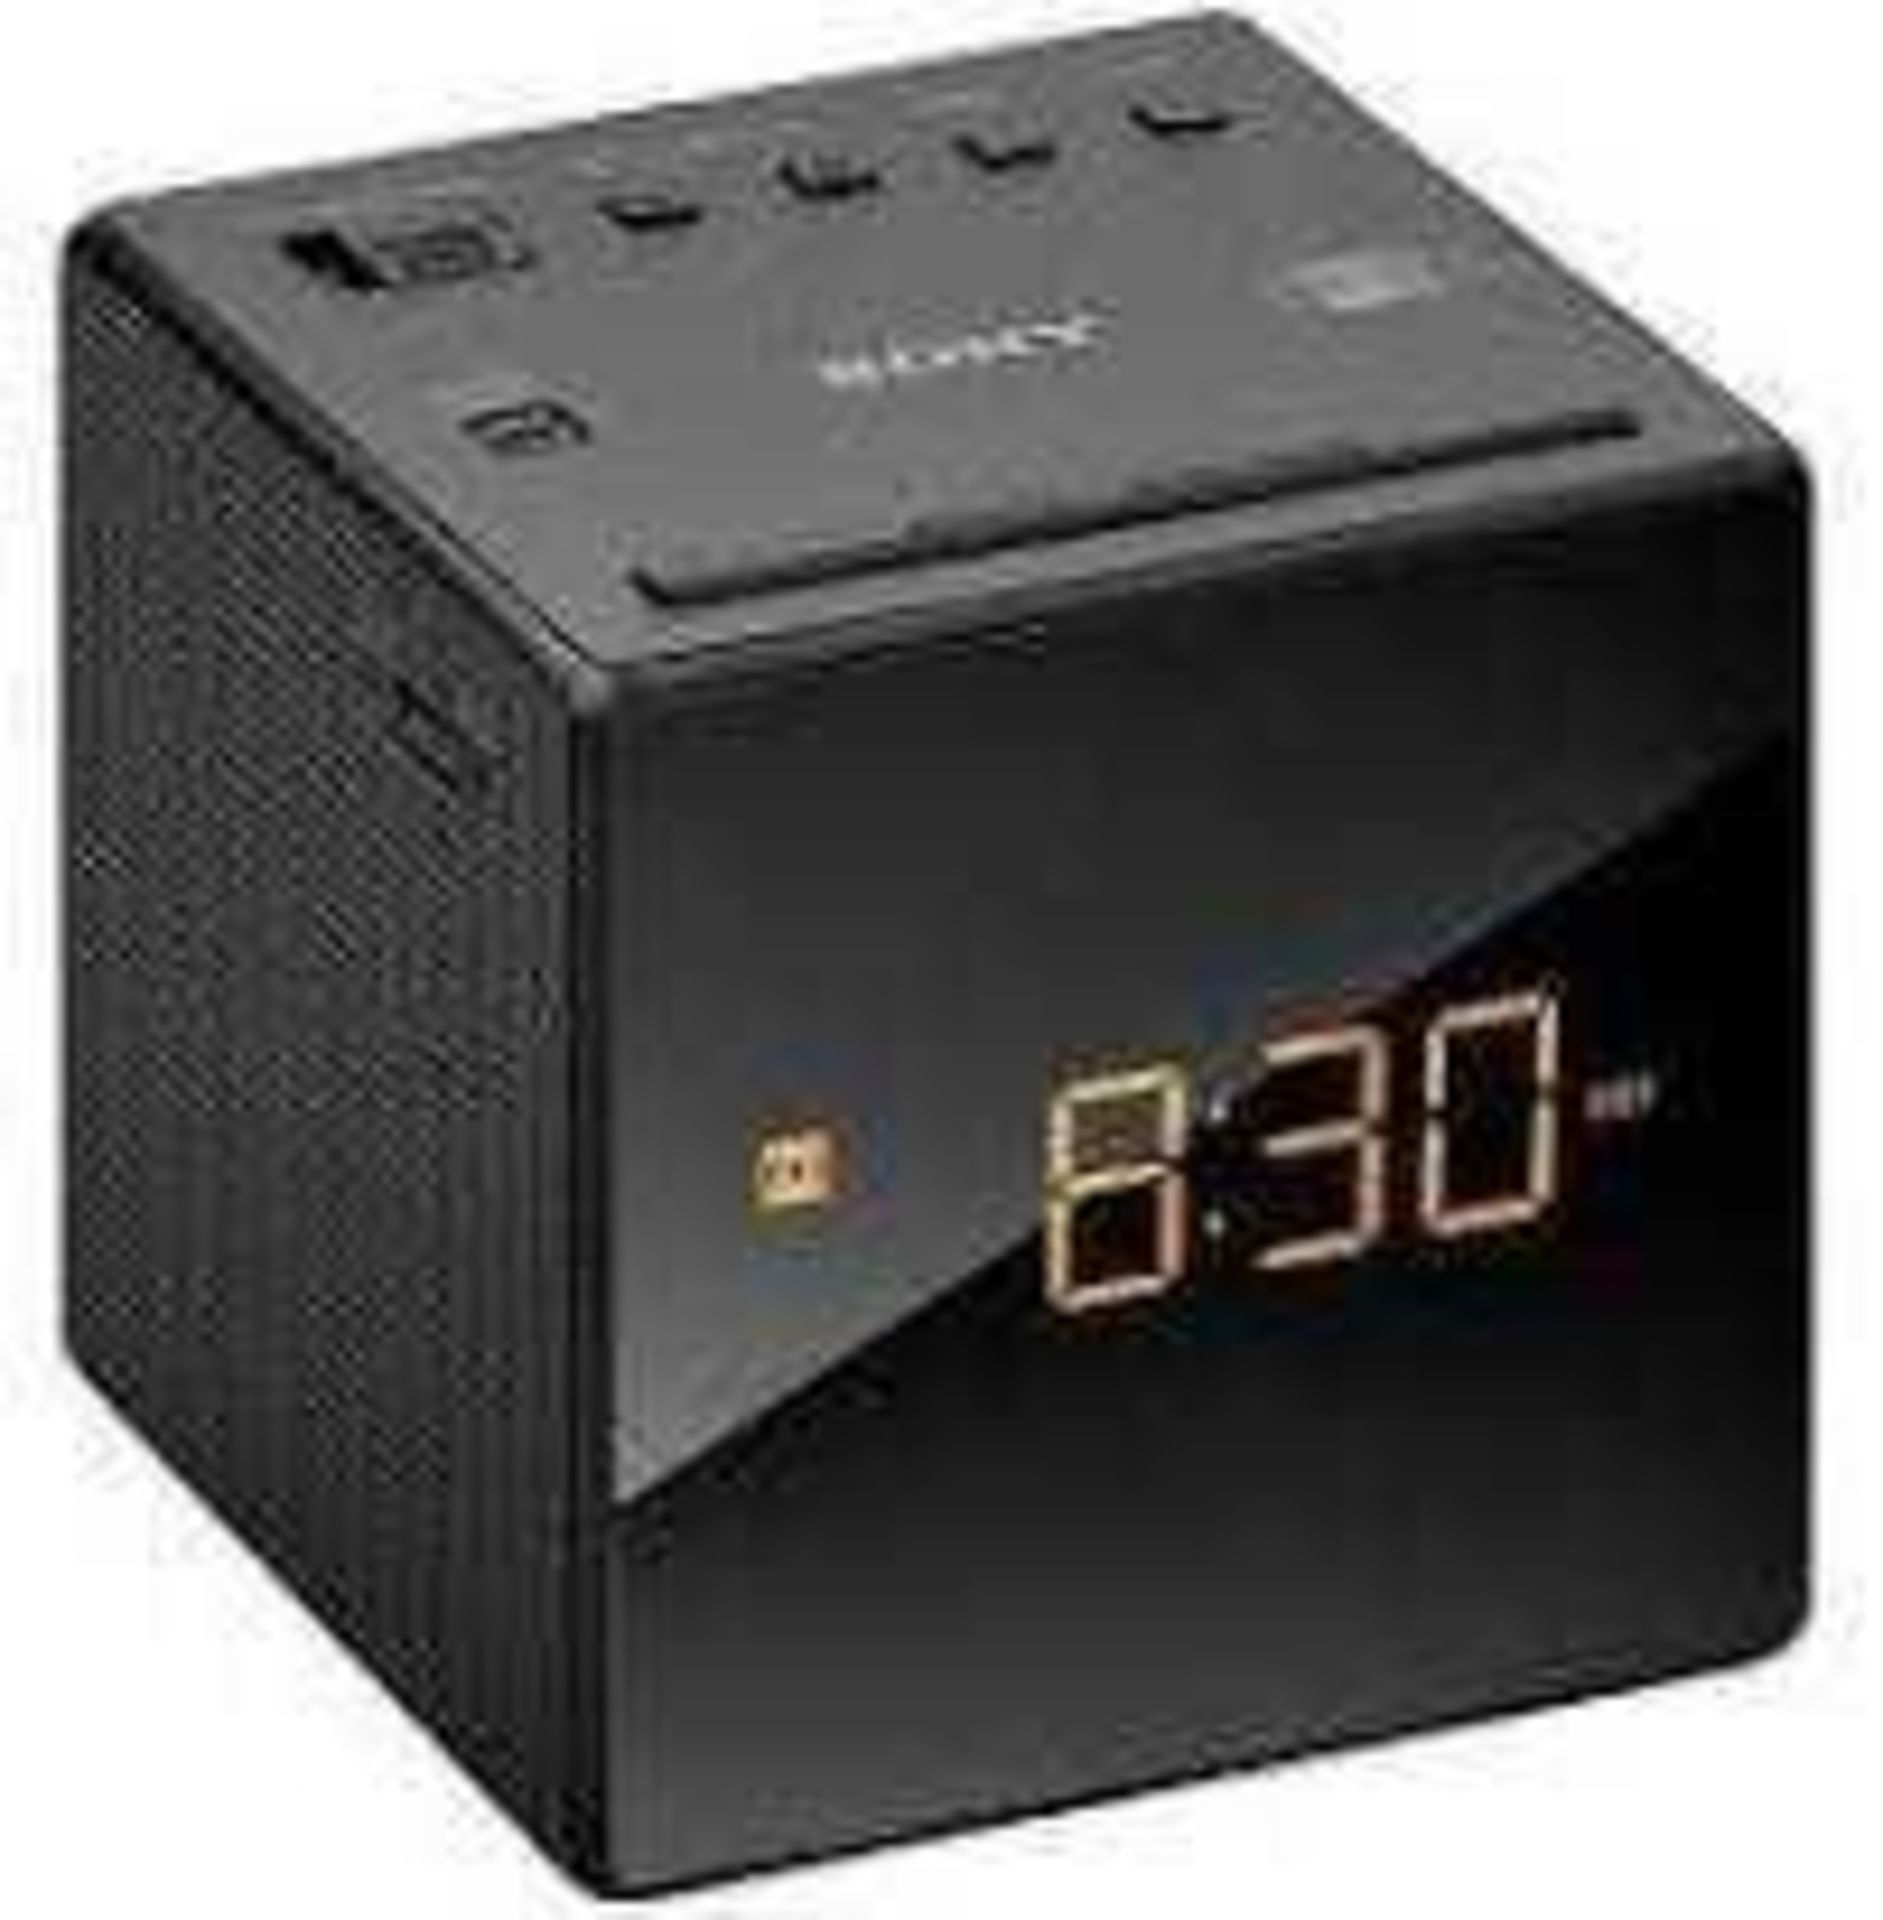 RRP £65 Boxed Sony Icf-C1 Mini Cube Alarm Clock